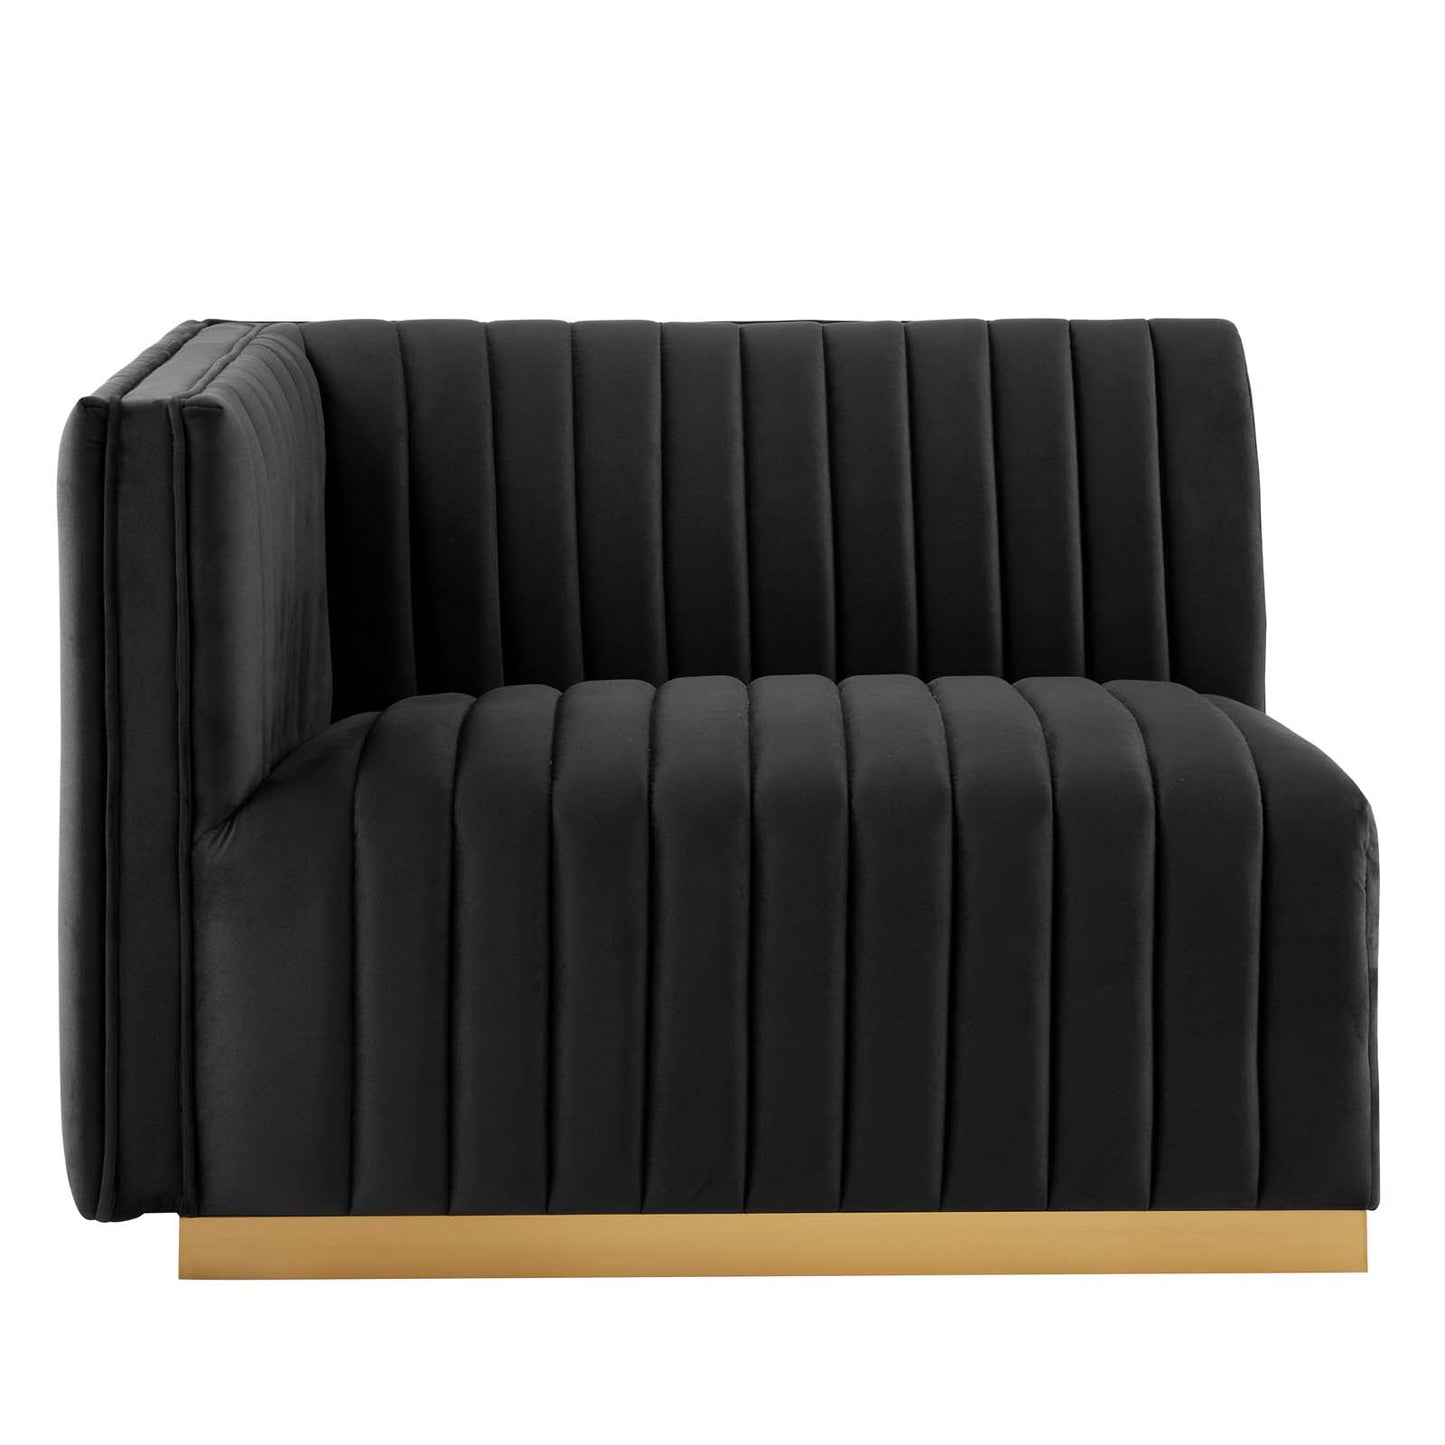 Conjure Channel Tufted Performance Velvet Left-Arm Chair Gold Black EEI-5502-GLD-BLK